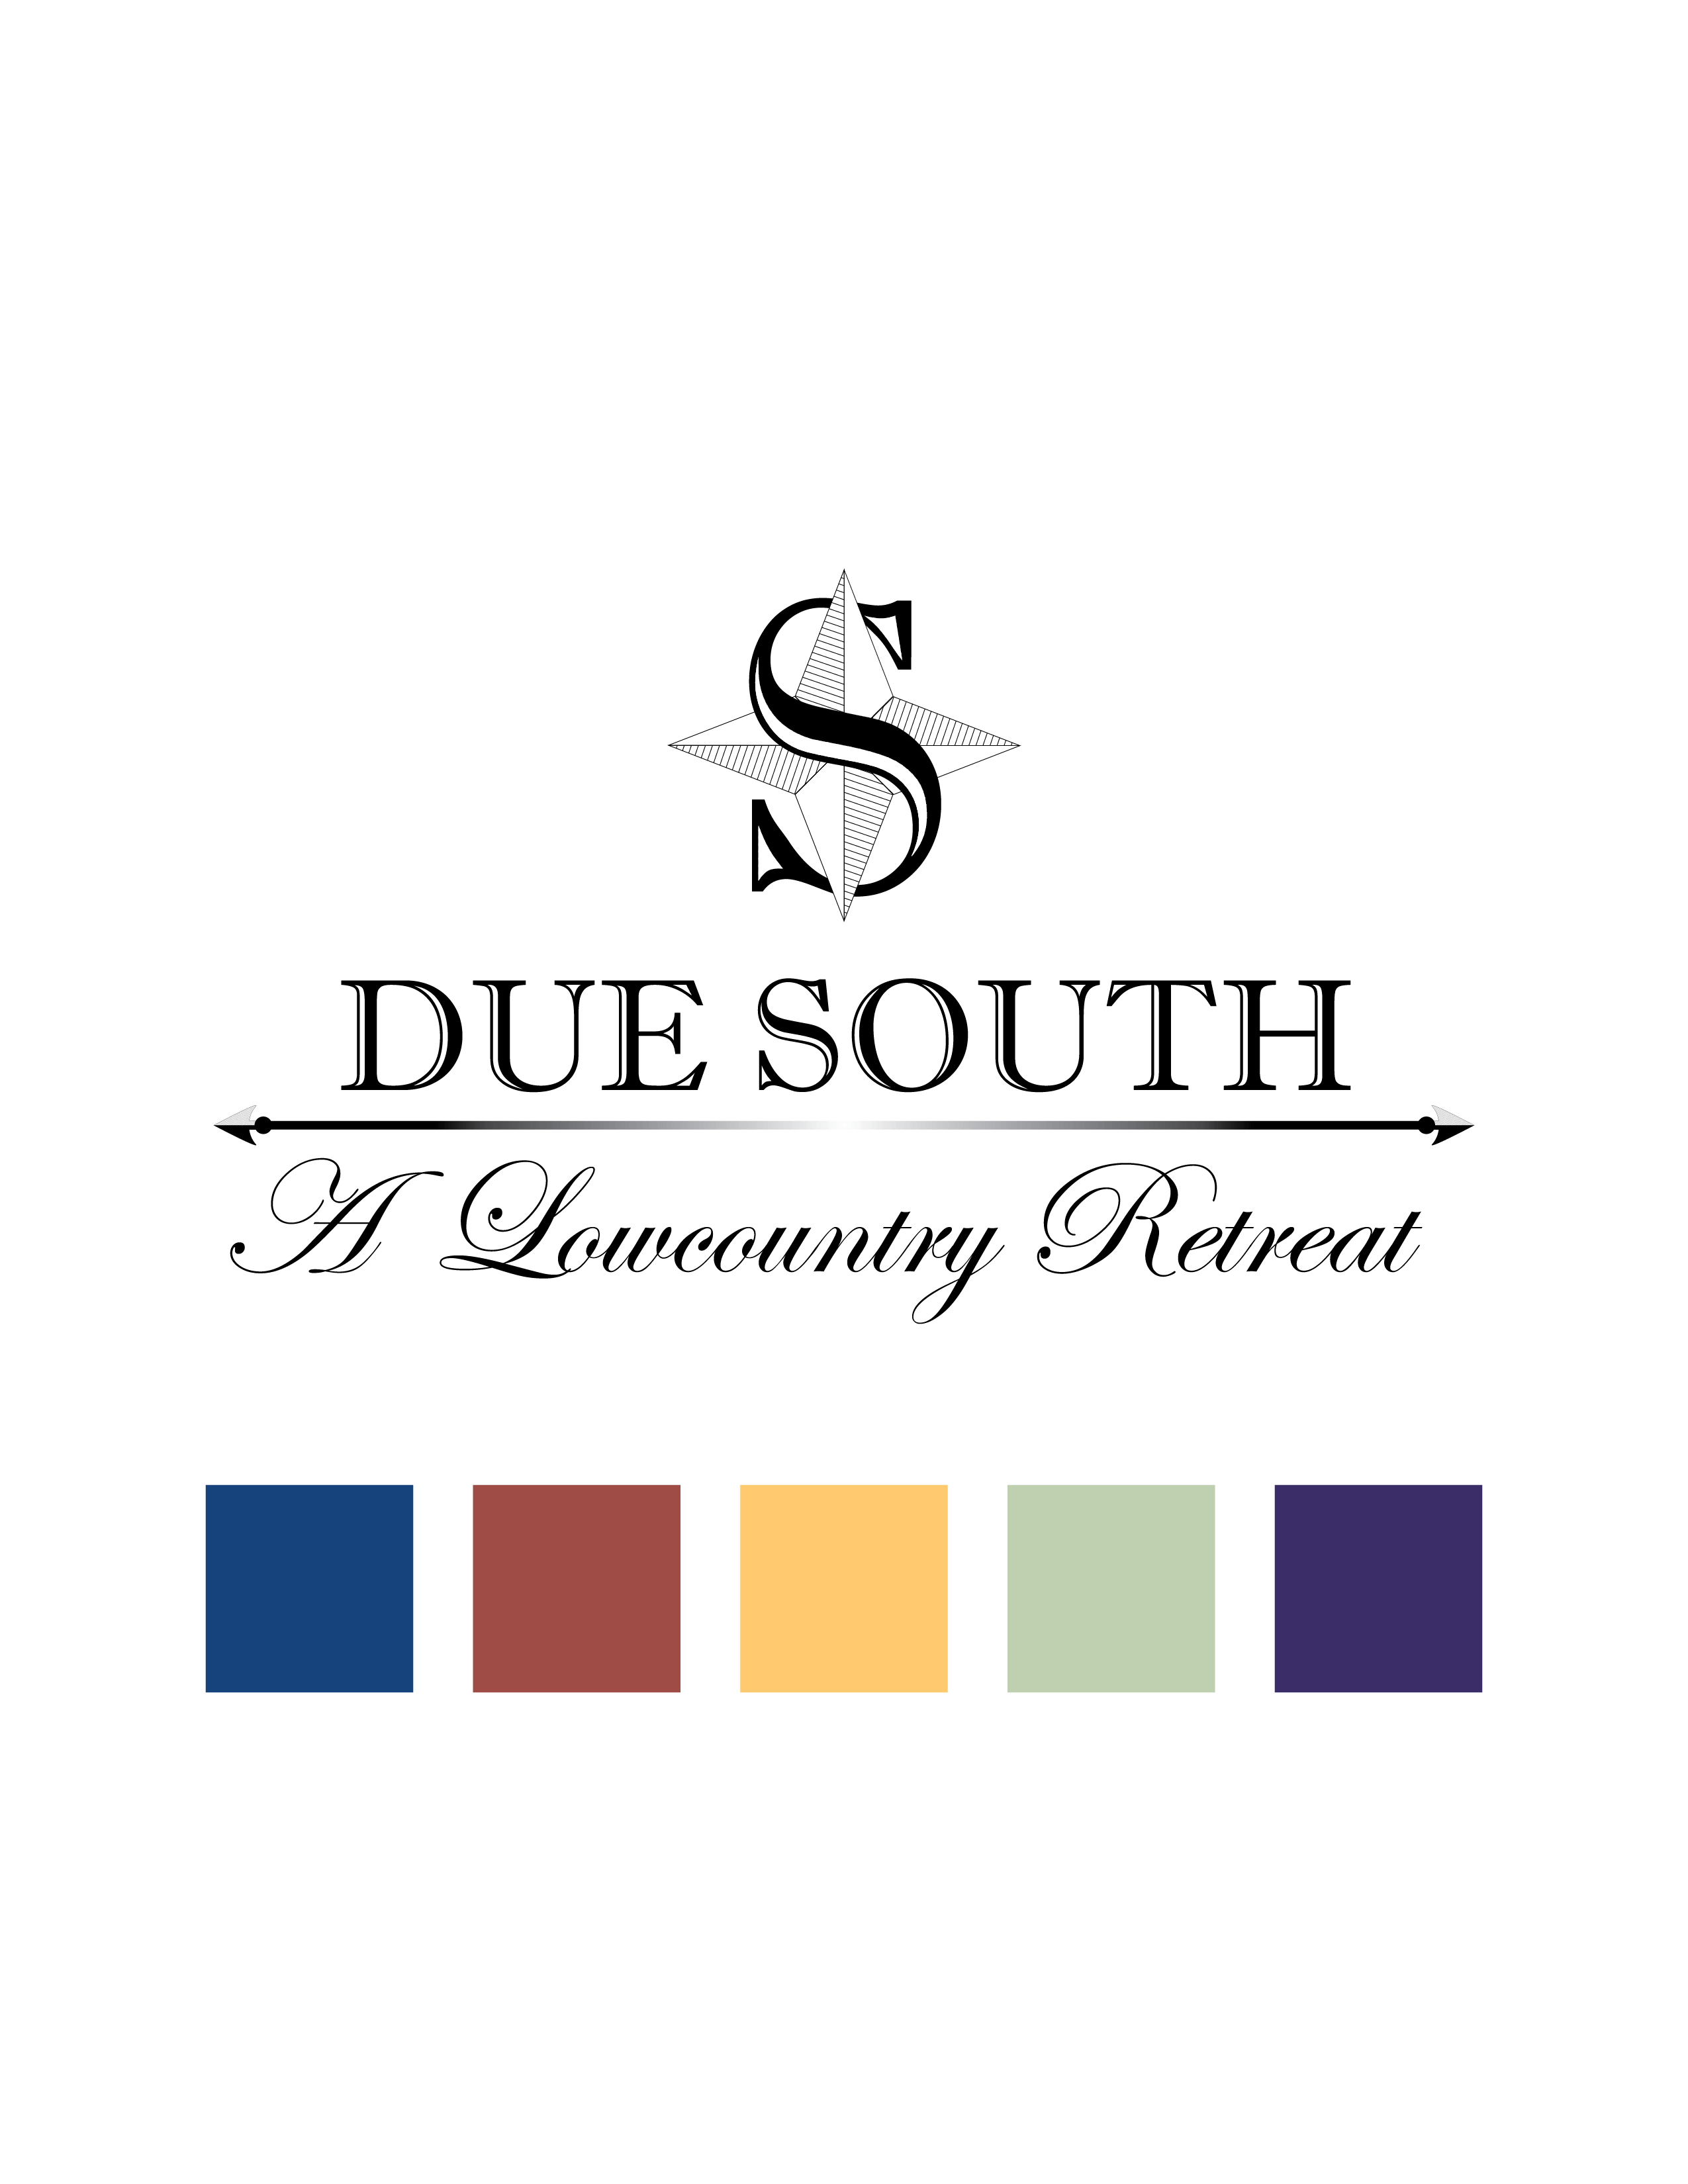 South Logo - Kate Posek DUE SOUTH LOGO